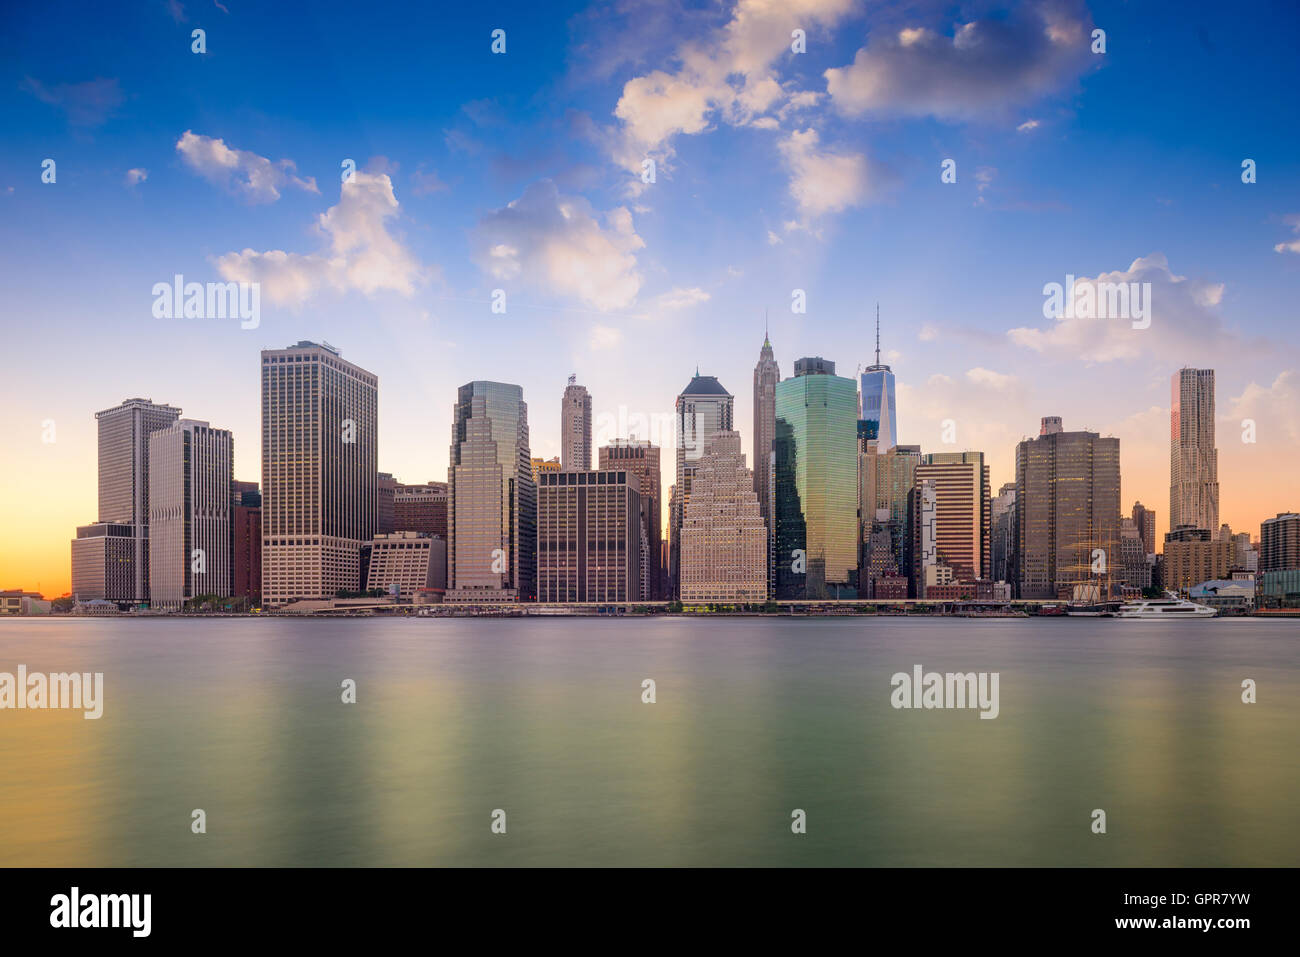 New York City, USA financial district skyline at dusk. Stock Photo